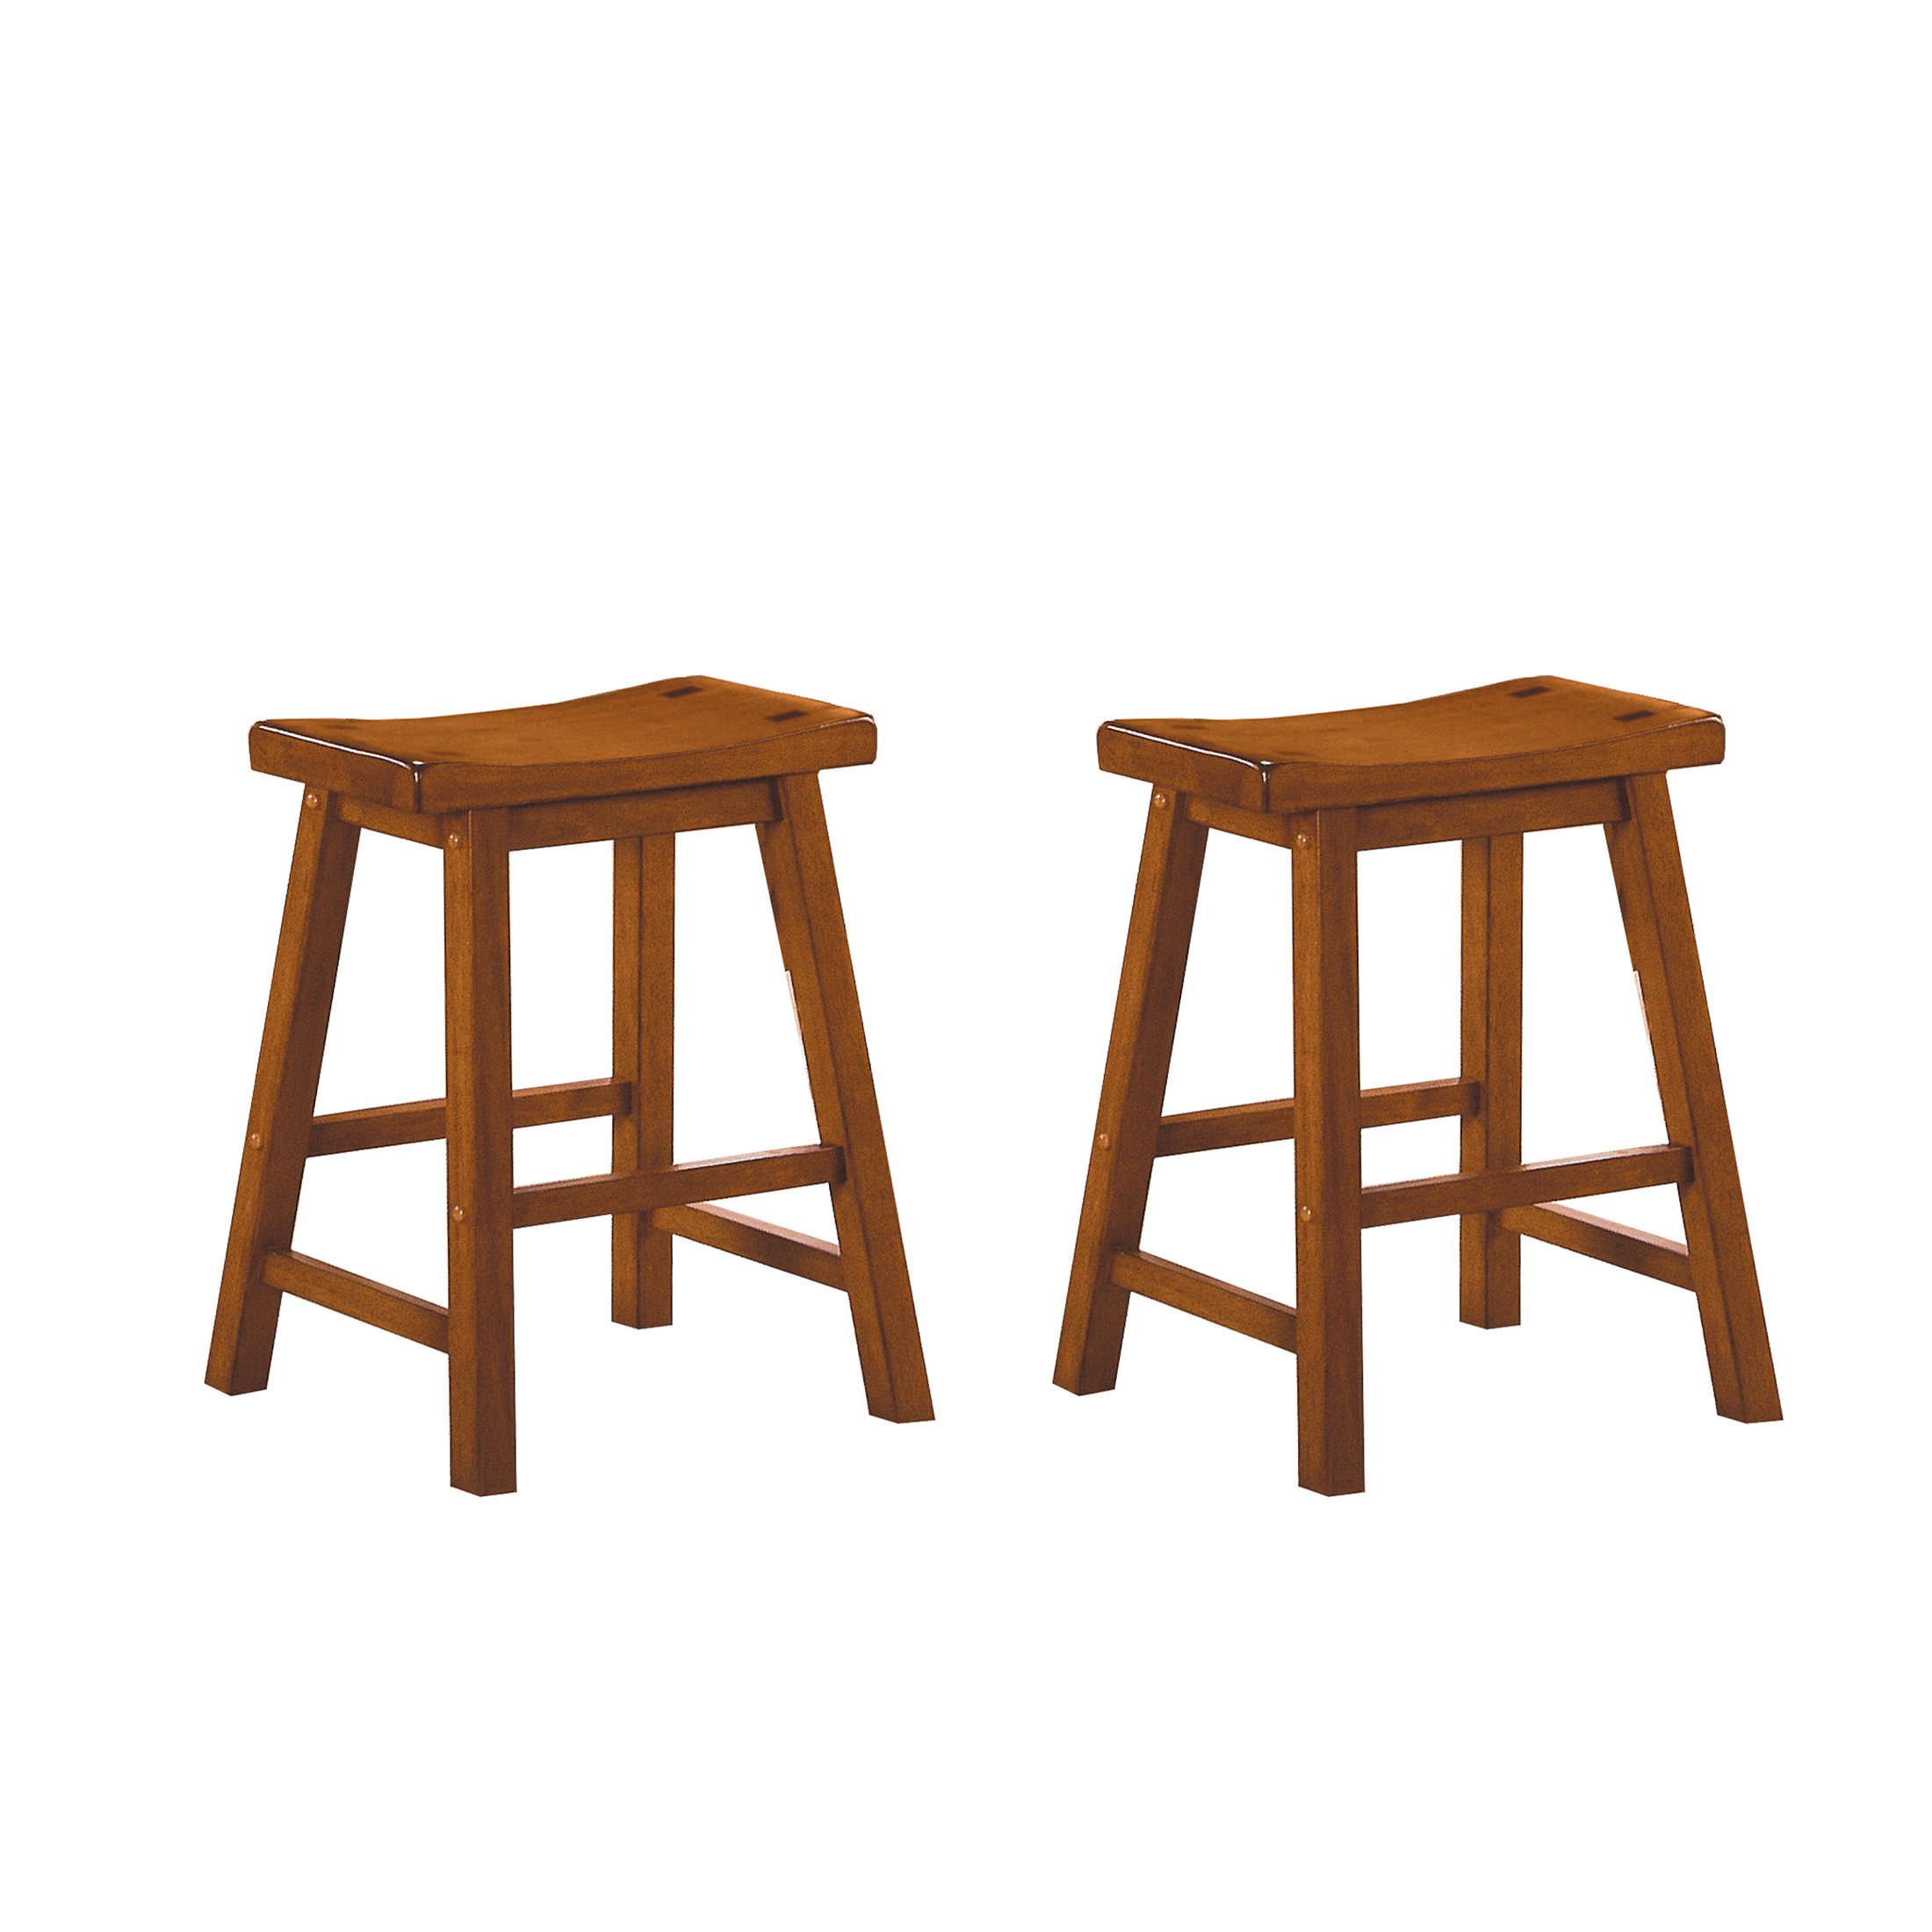 OakvillePark Gering Wood Saddle Seat Dining Height Stool (Set of 2), 18", Oak - image 1 of 3